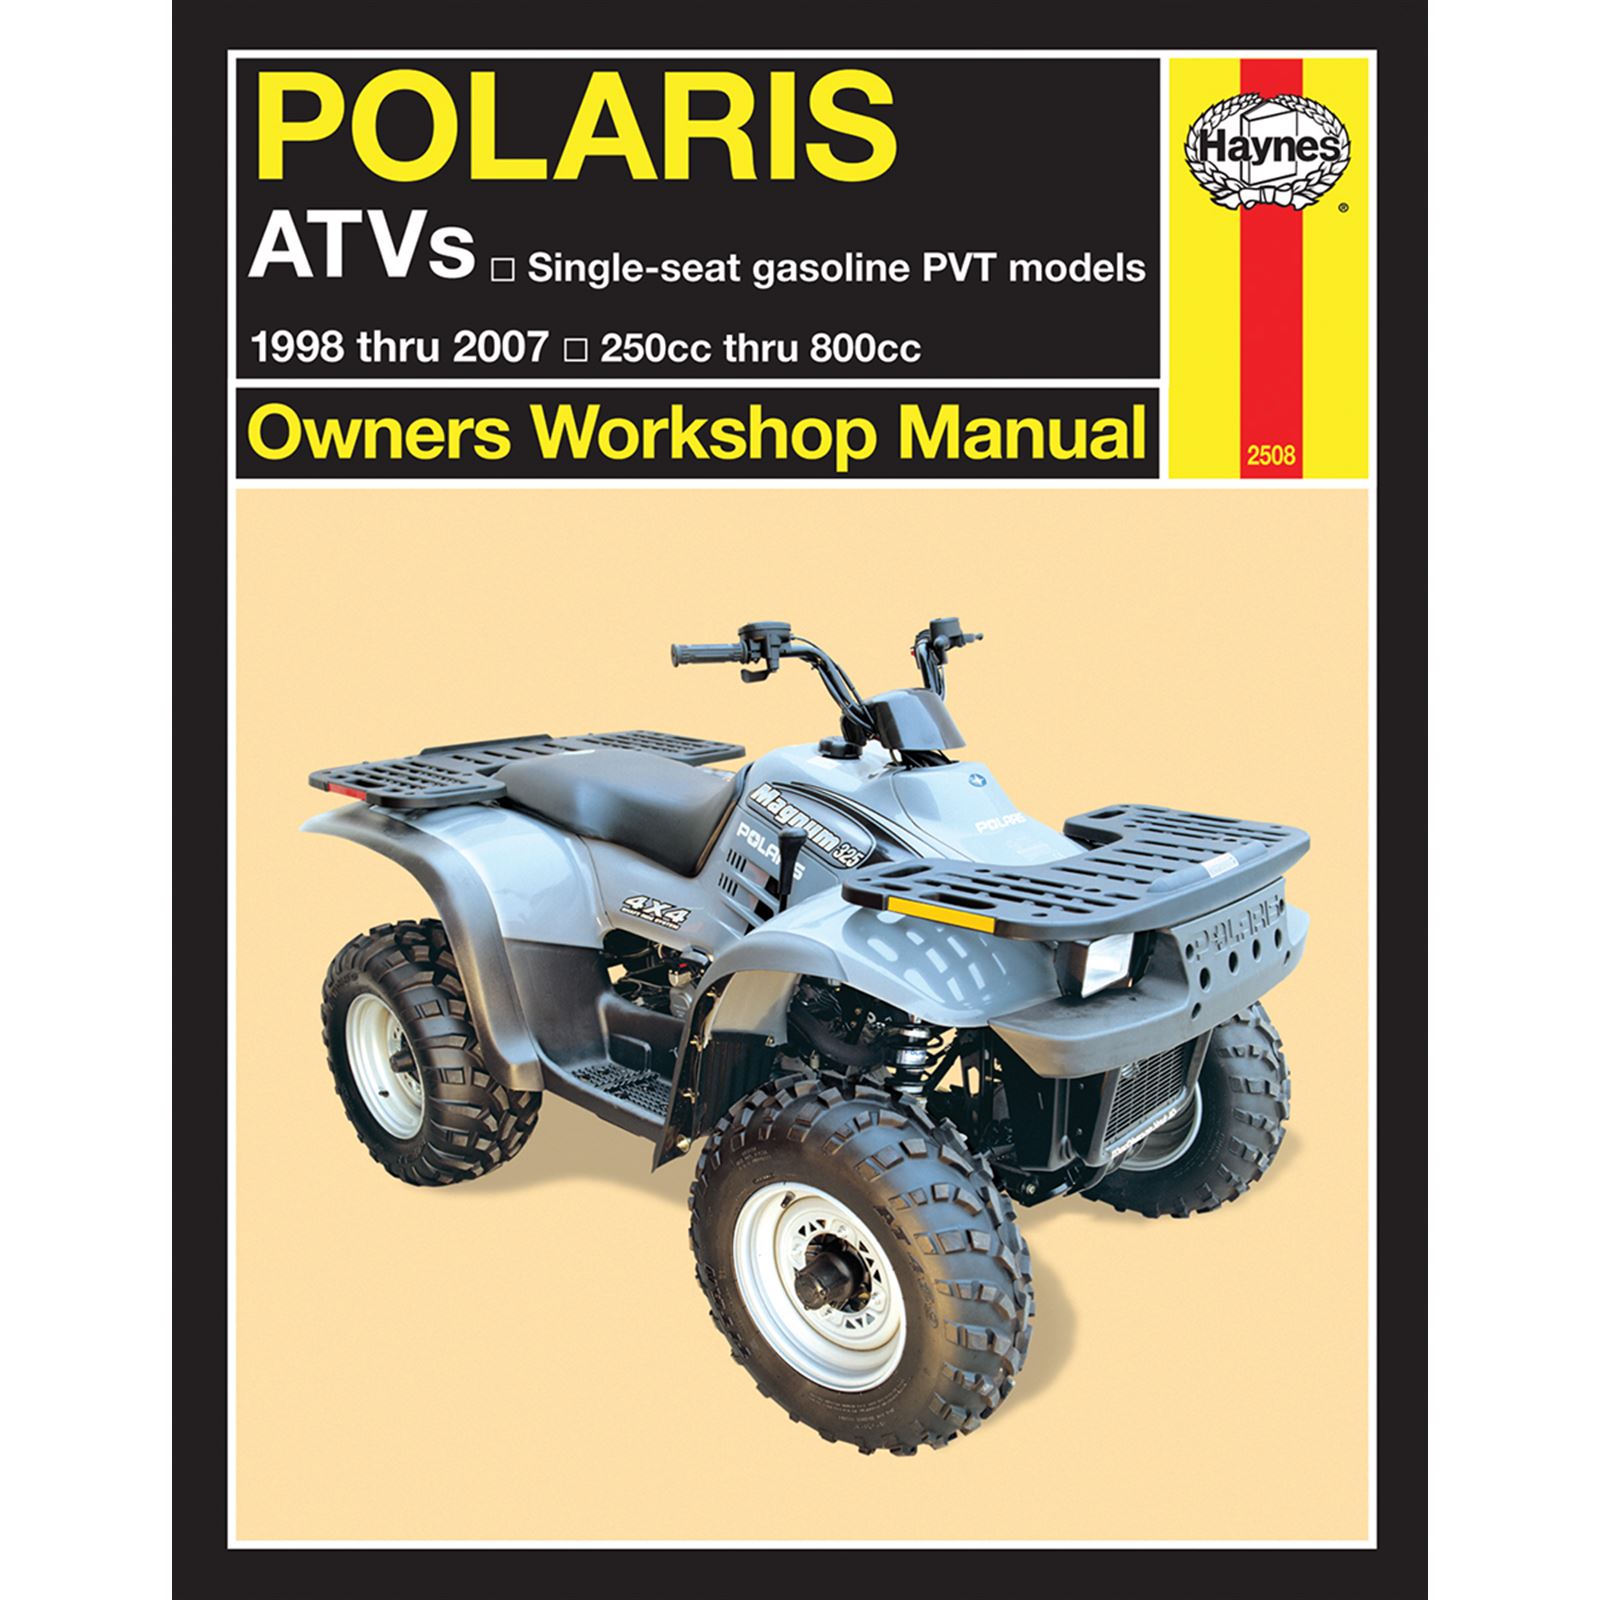 Haynes Manuals Manual for Polaris